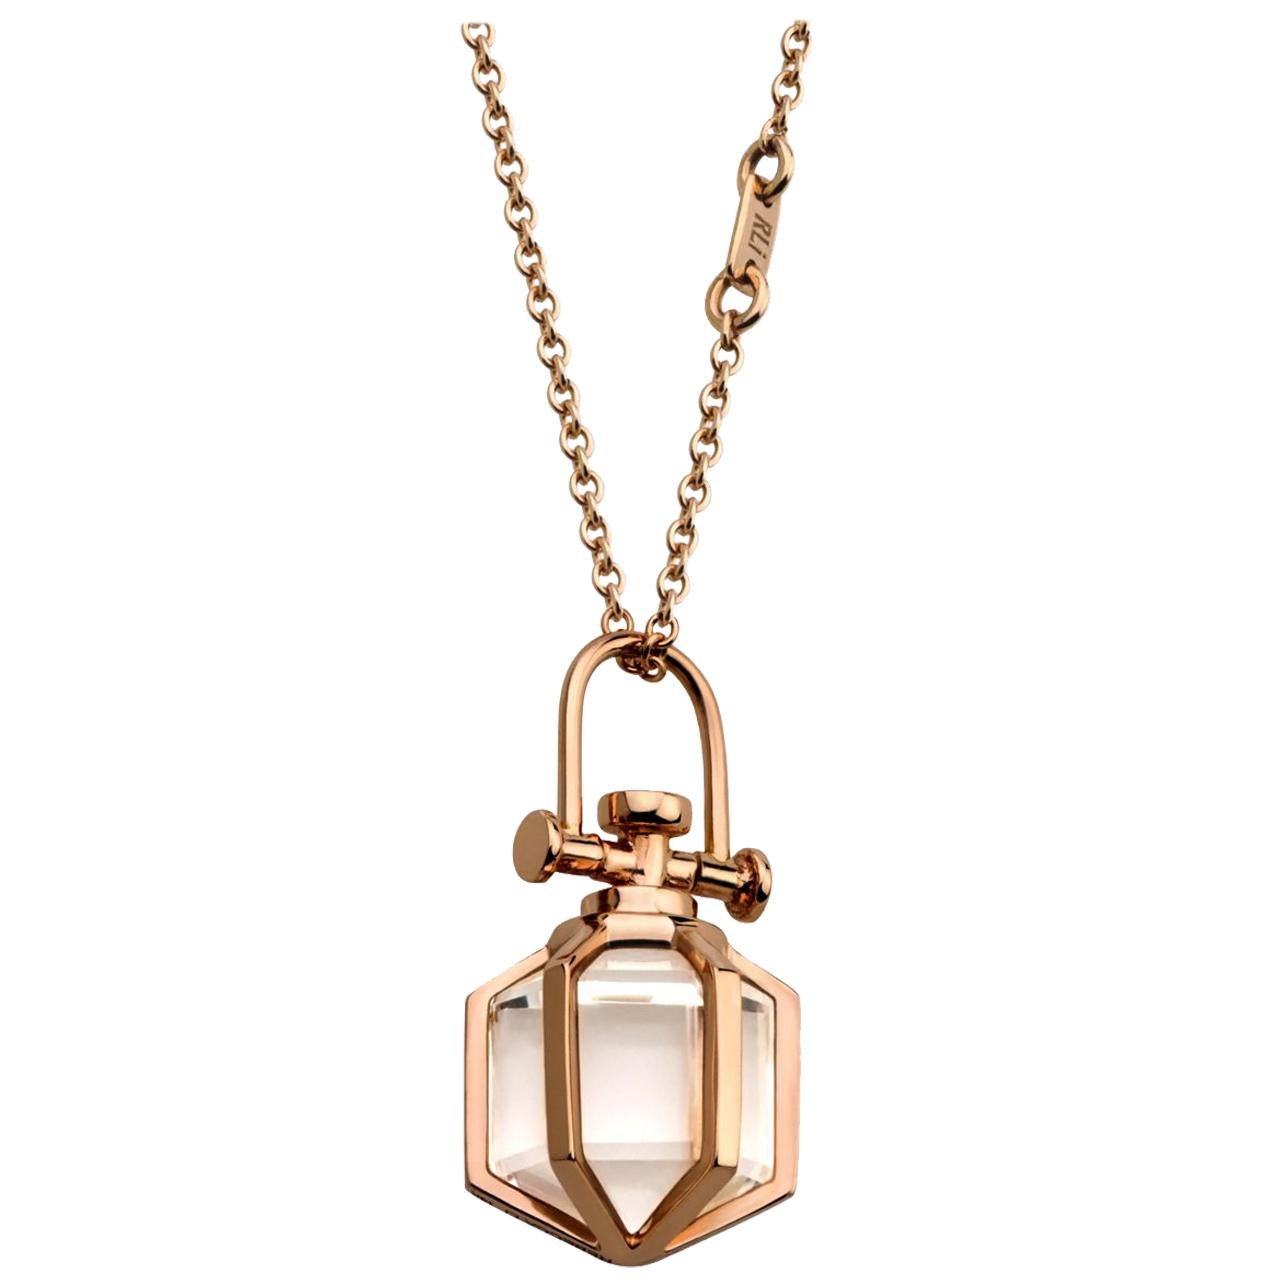 Modern Sacred Minimalism 18k Rose Gold Talisman Amulet Necklace w/ Rock Crystal